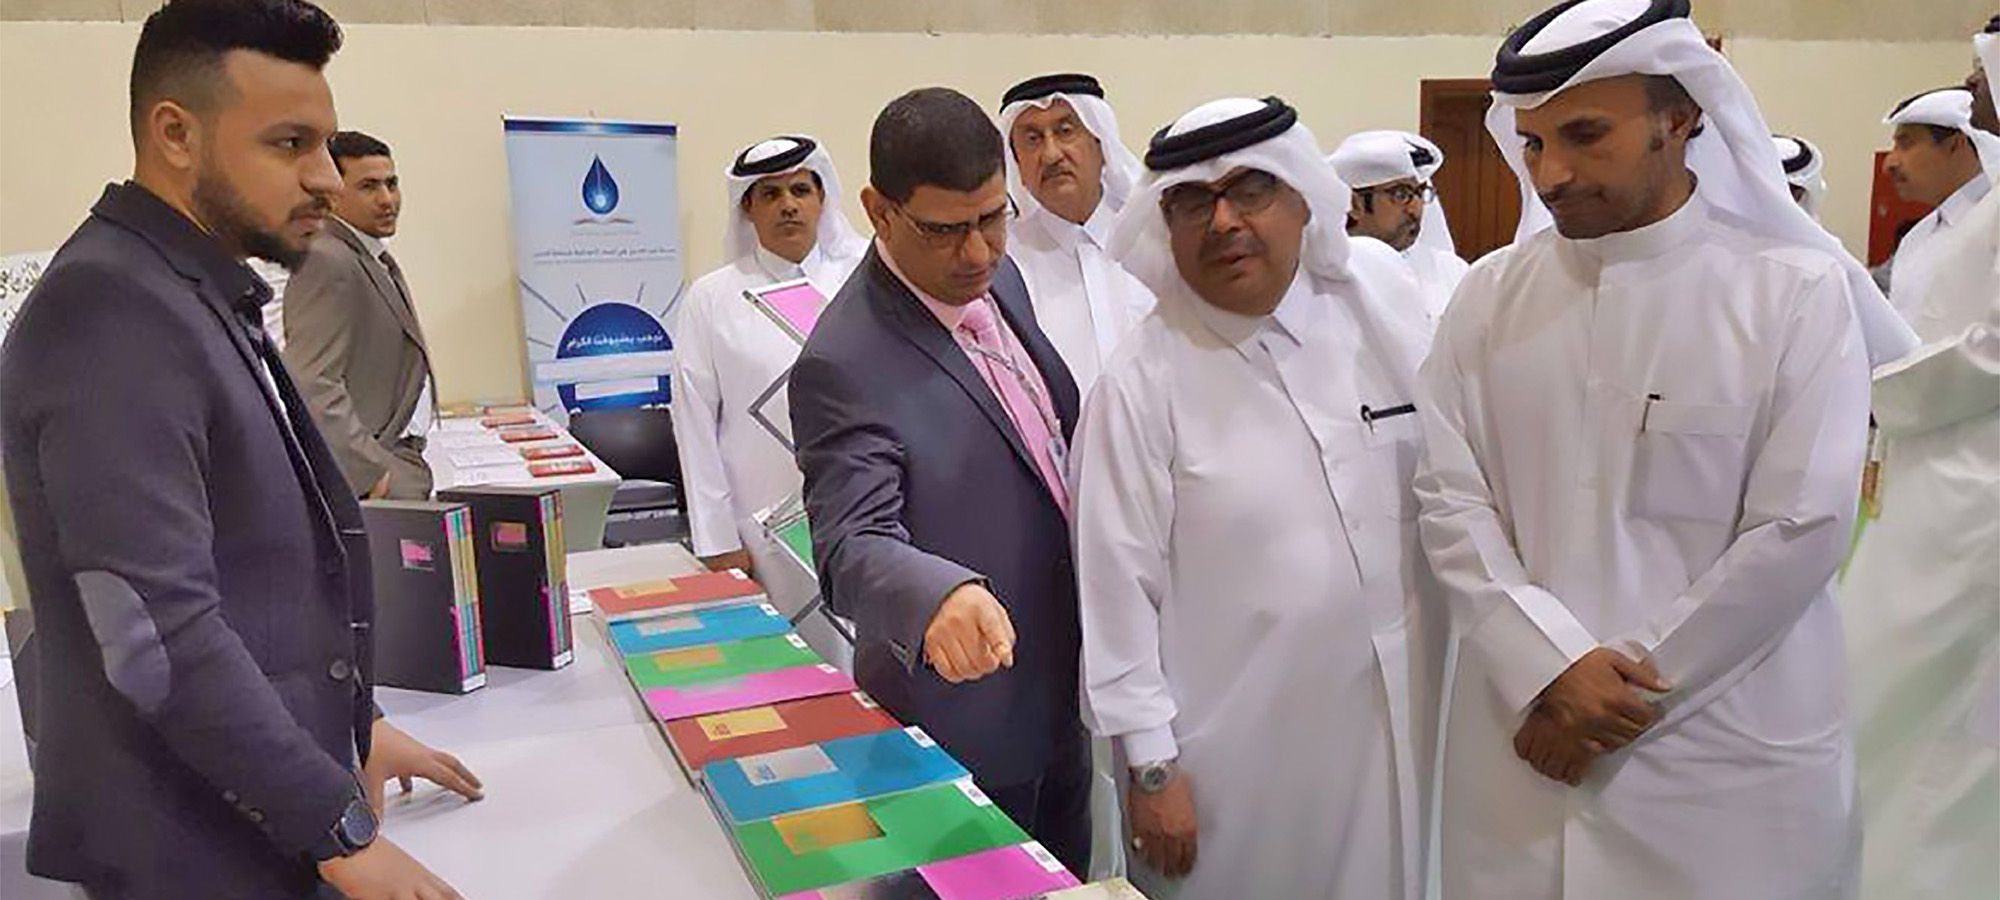 The Center participates in the first national book fair at Al Khor, Qatar (April 2017)